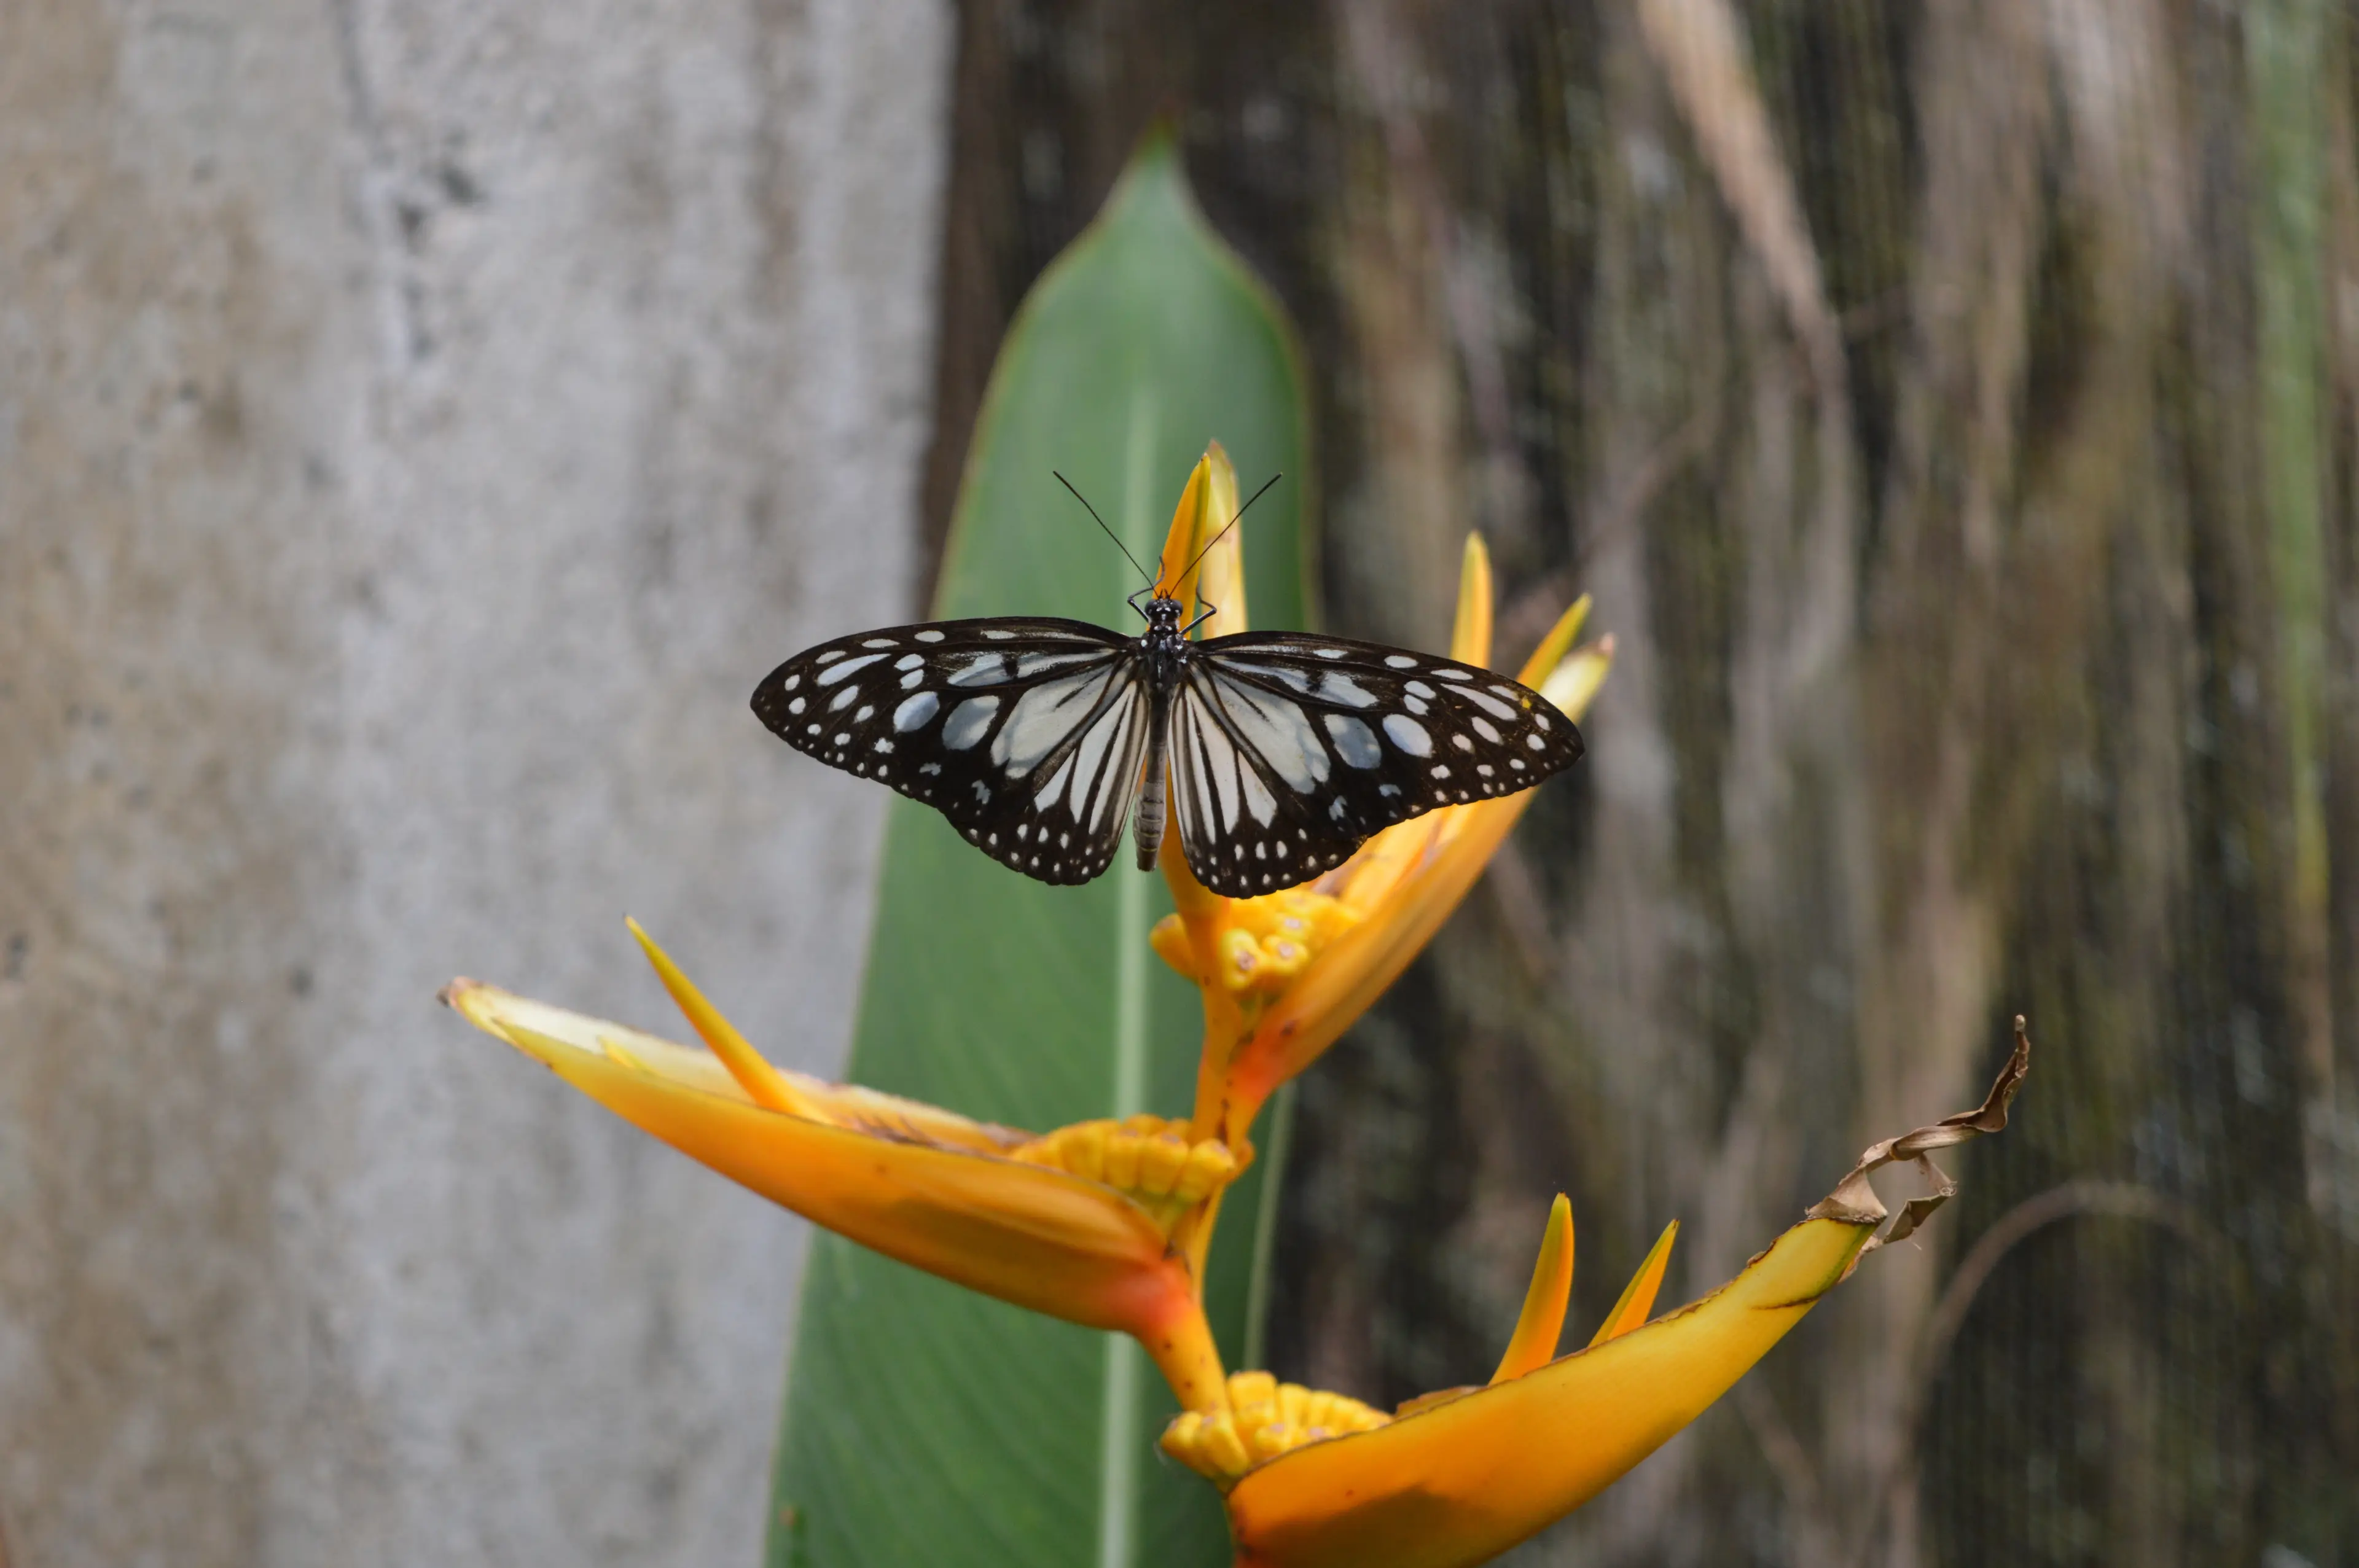 Boracay Butterfly Garden